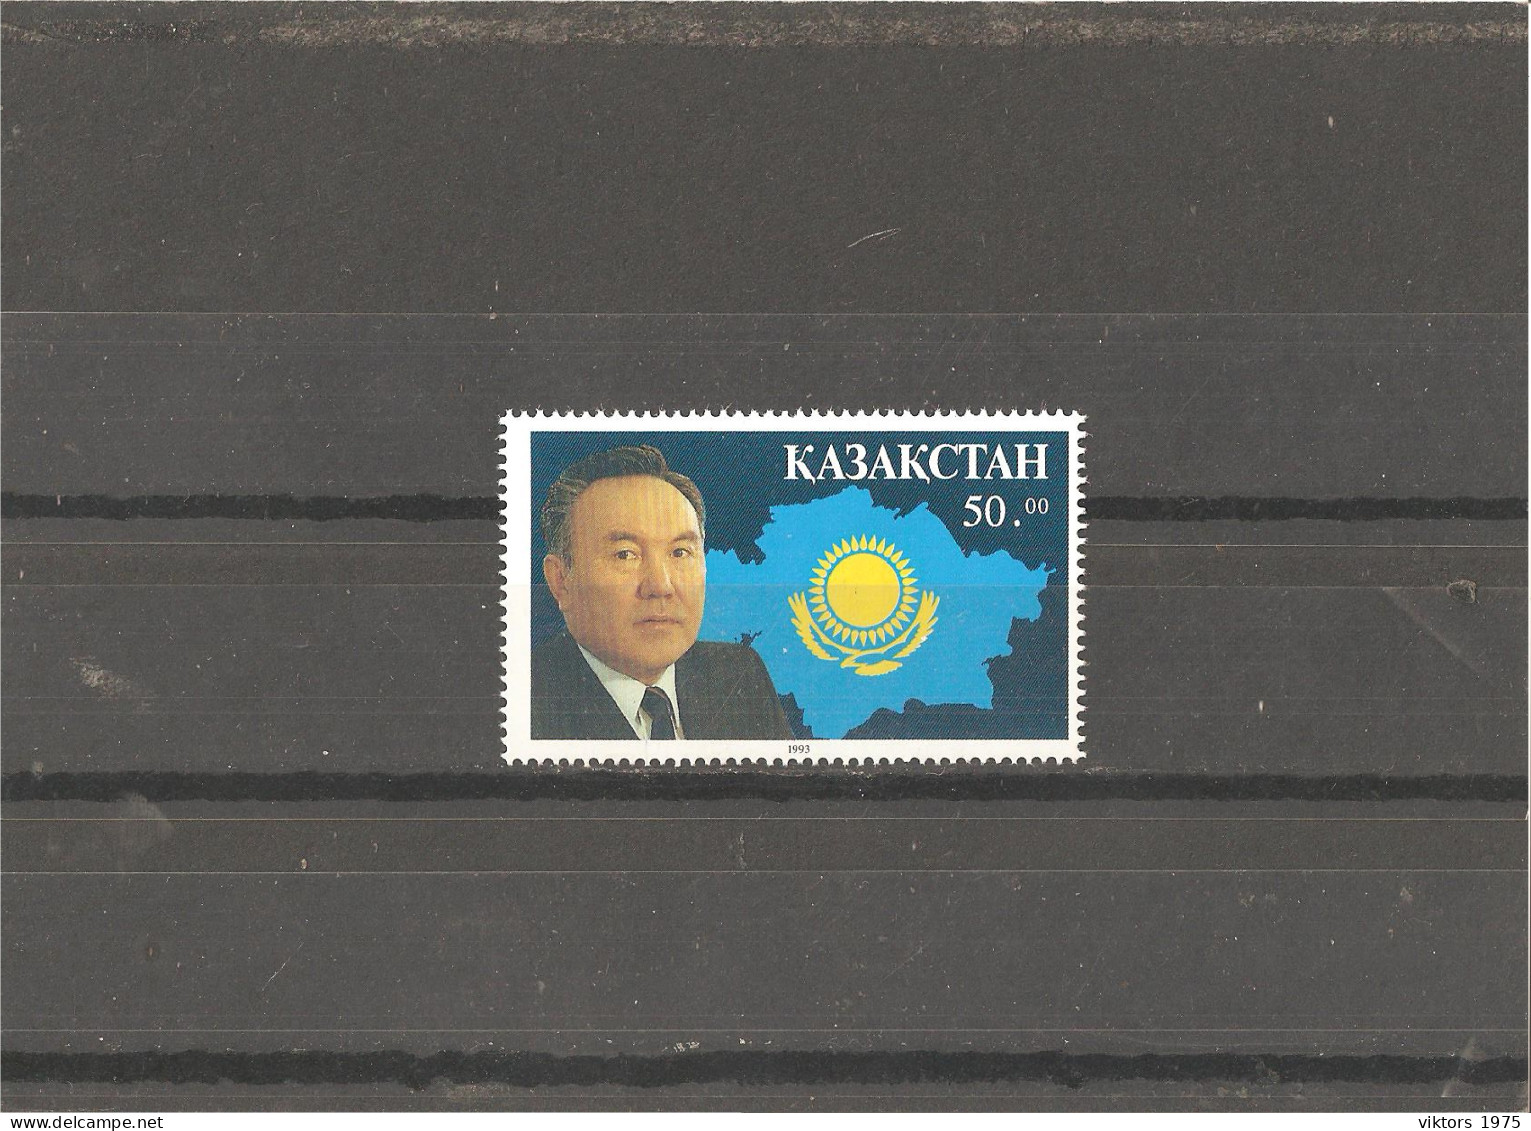 MNH Stamp Nr.28 In MICHEL Catalog - Kazakhstan